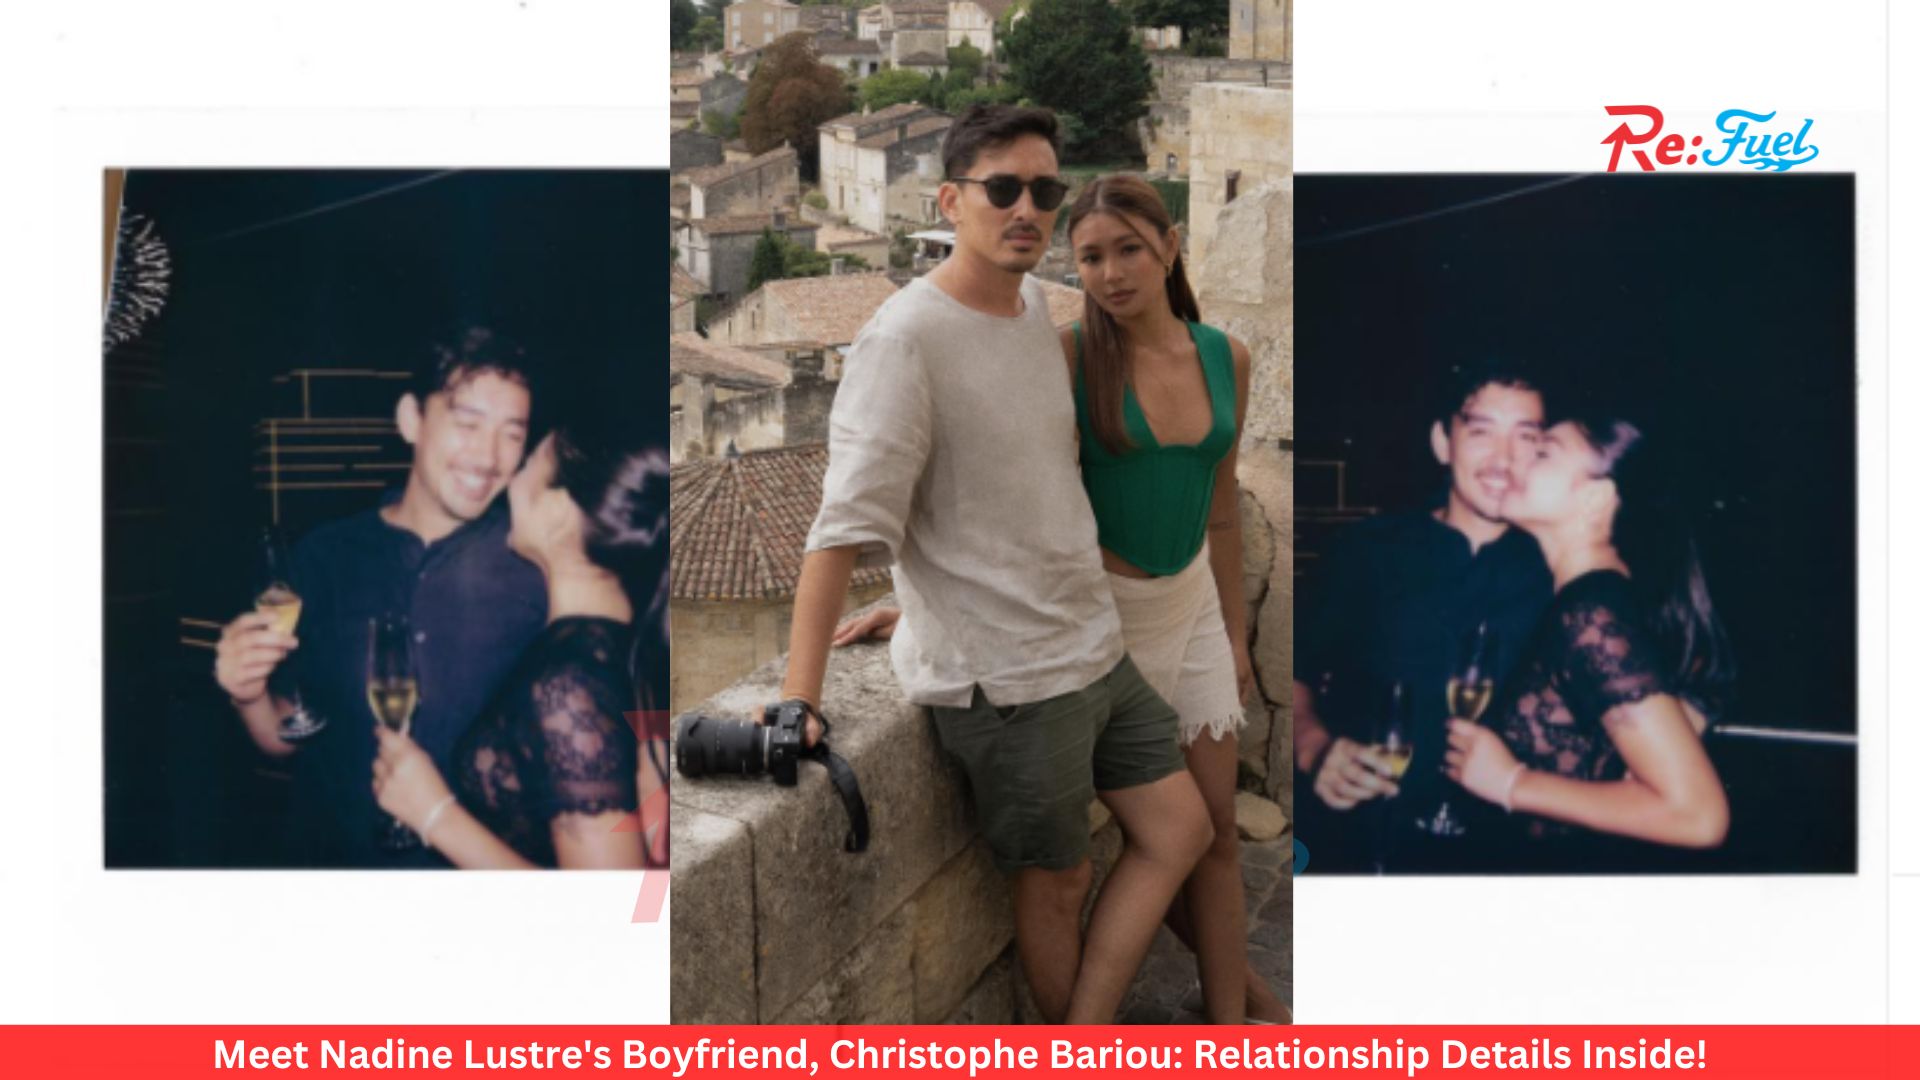 Meet Nadine Lustre's Boyfriend, Christophe Bariou: Relationship Details Inside!